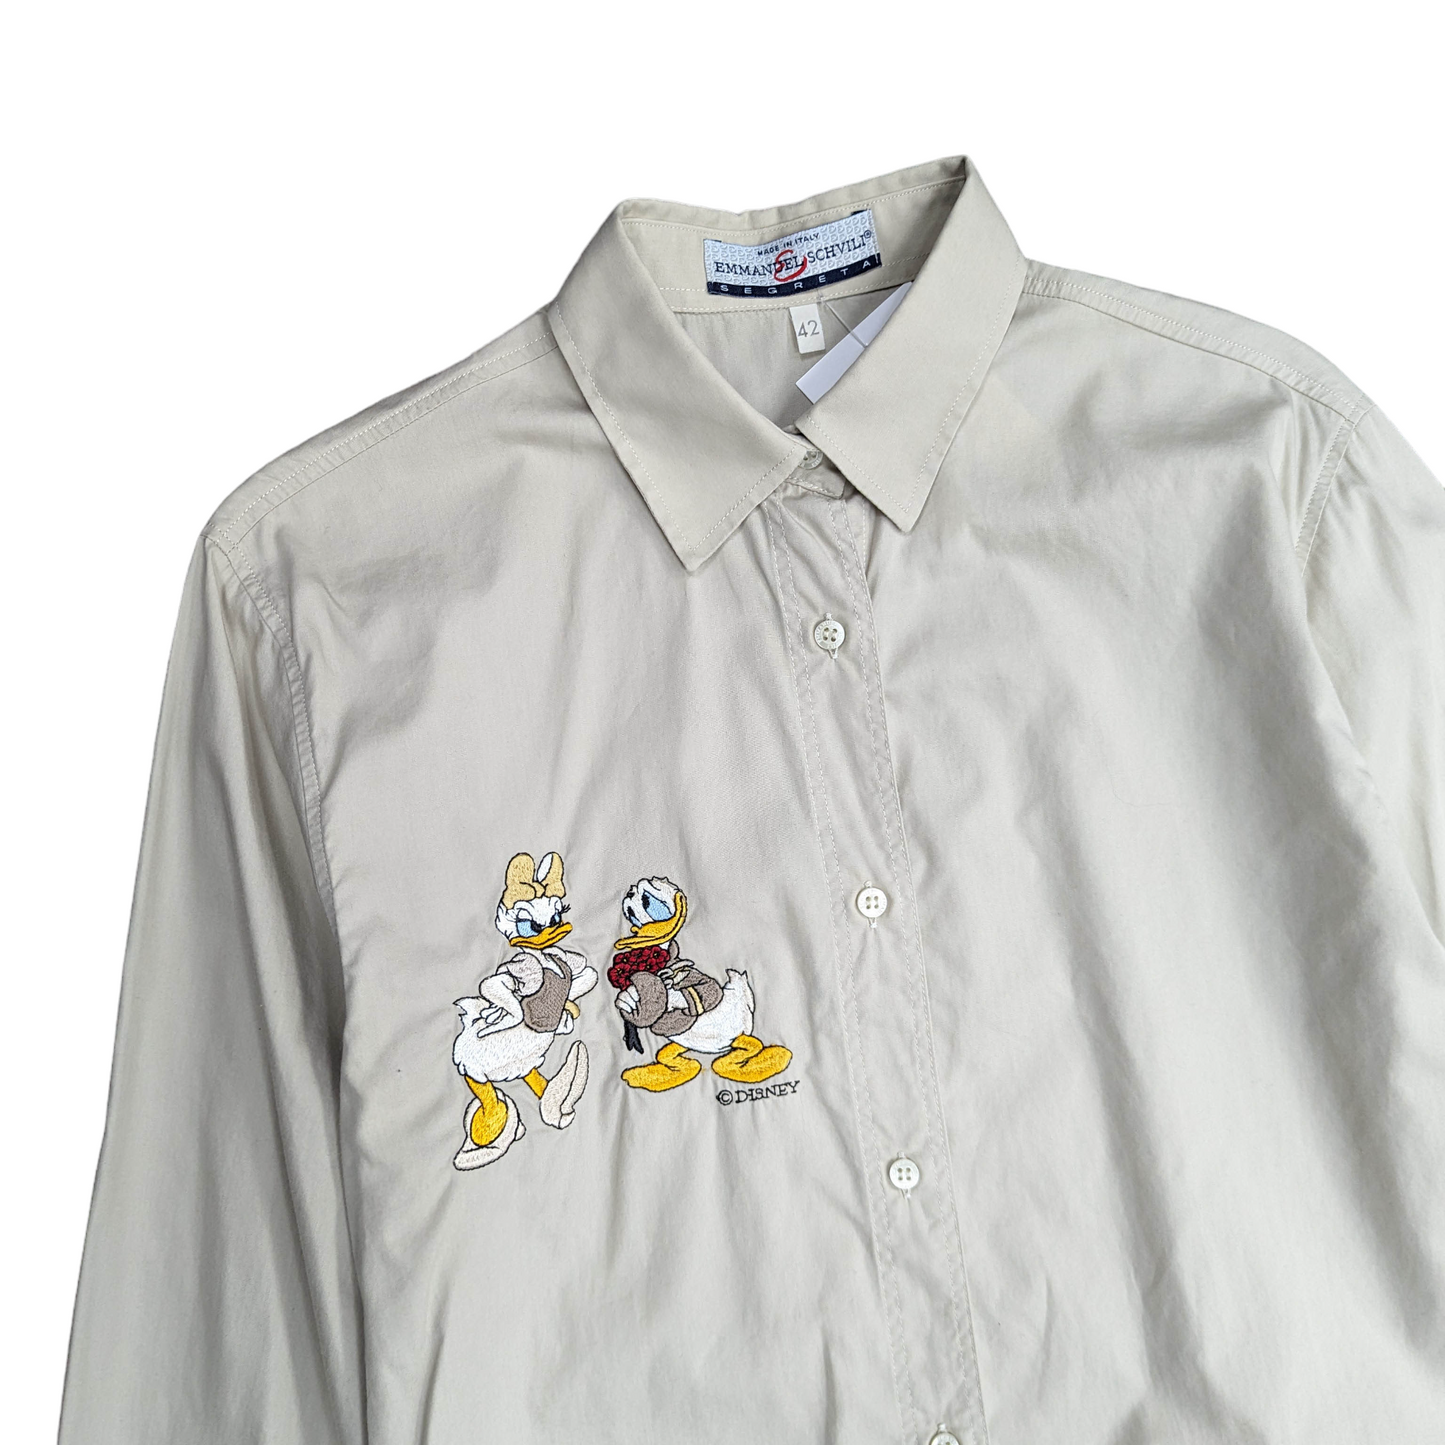 Vintage Segreta Disney Shirt Size S